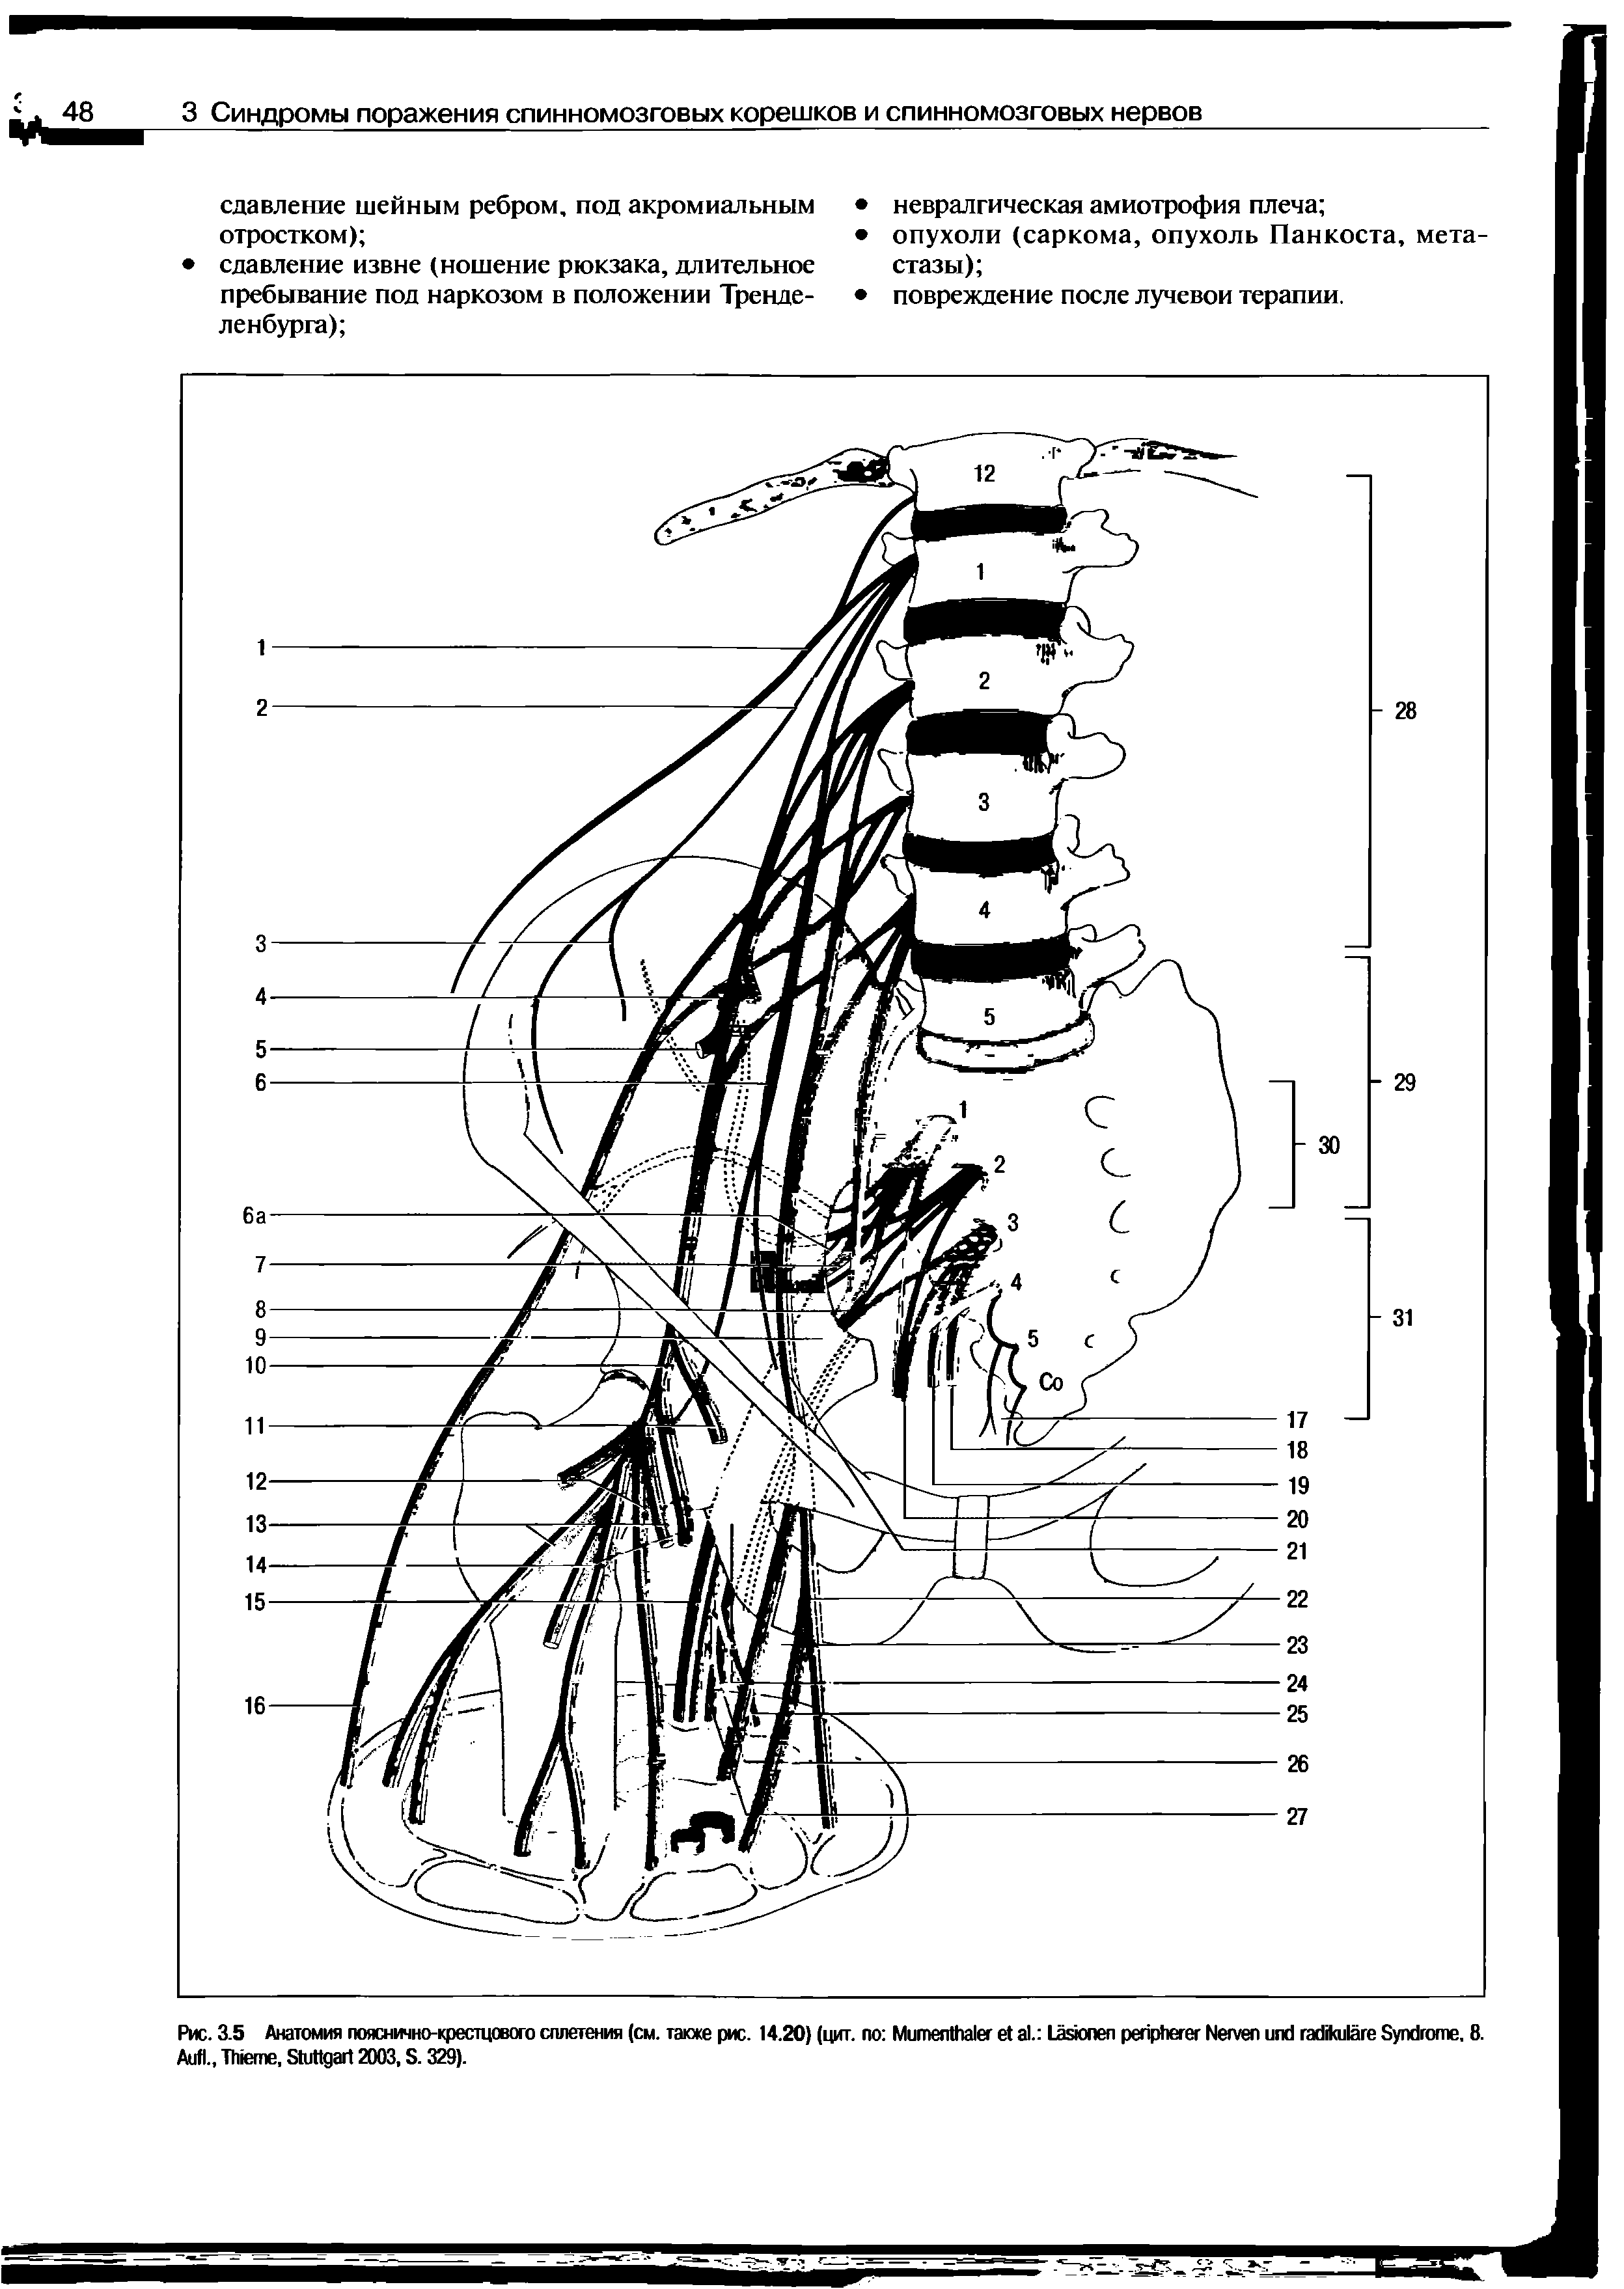 Рис. 3.5 Анатомия пояснично-крестцового сплетения (см. также рис. 14.20) (цит. по M . L N S . 8. A ., T , S 2003, S. 329).